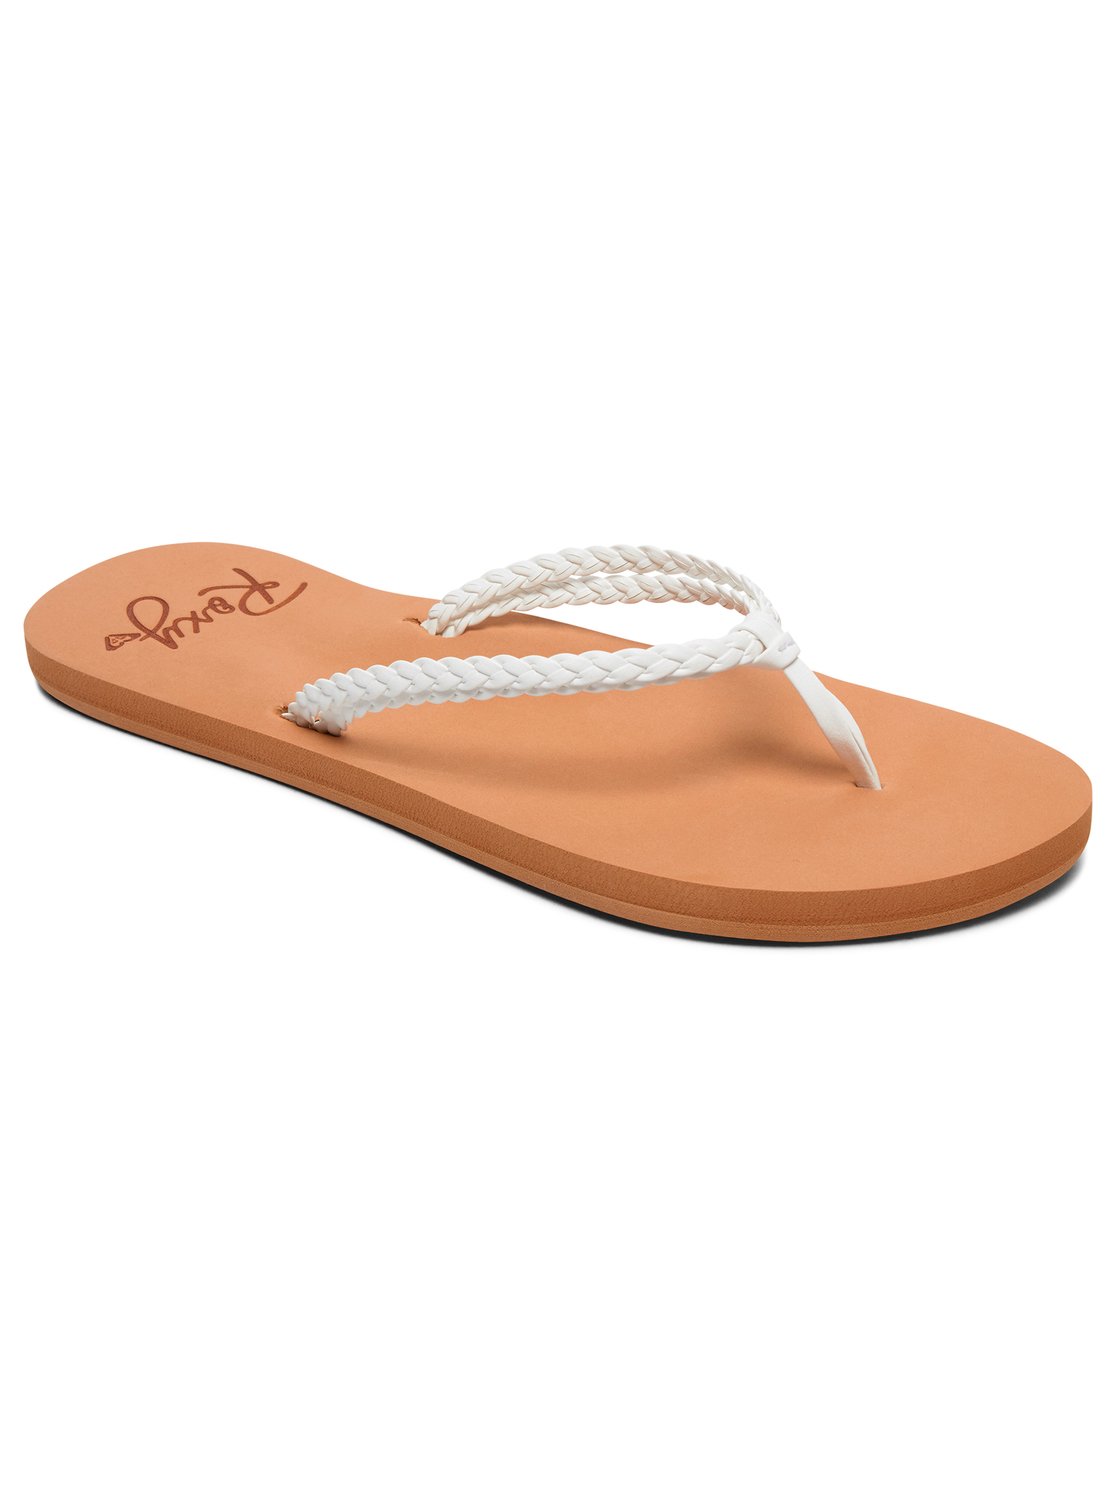 Roxy Costas Womens Sandal WHT-White 5